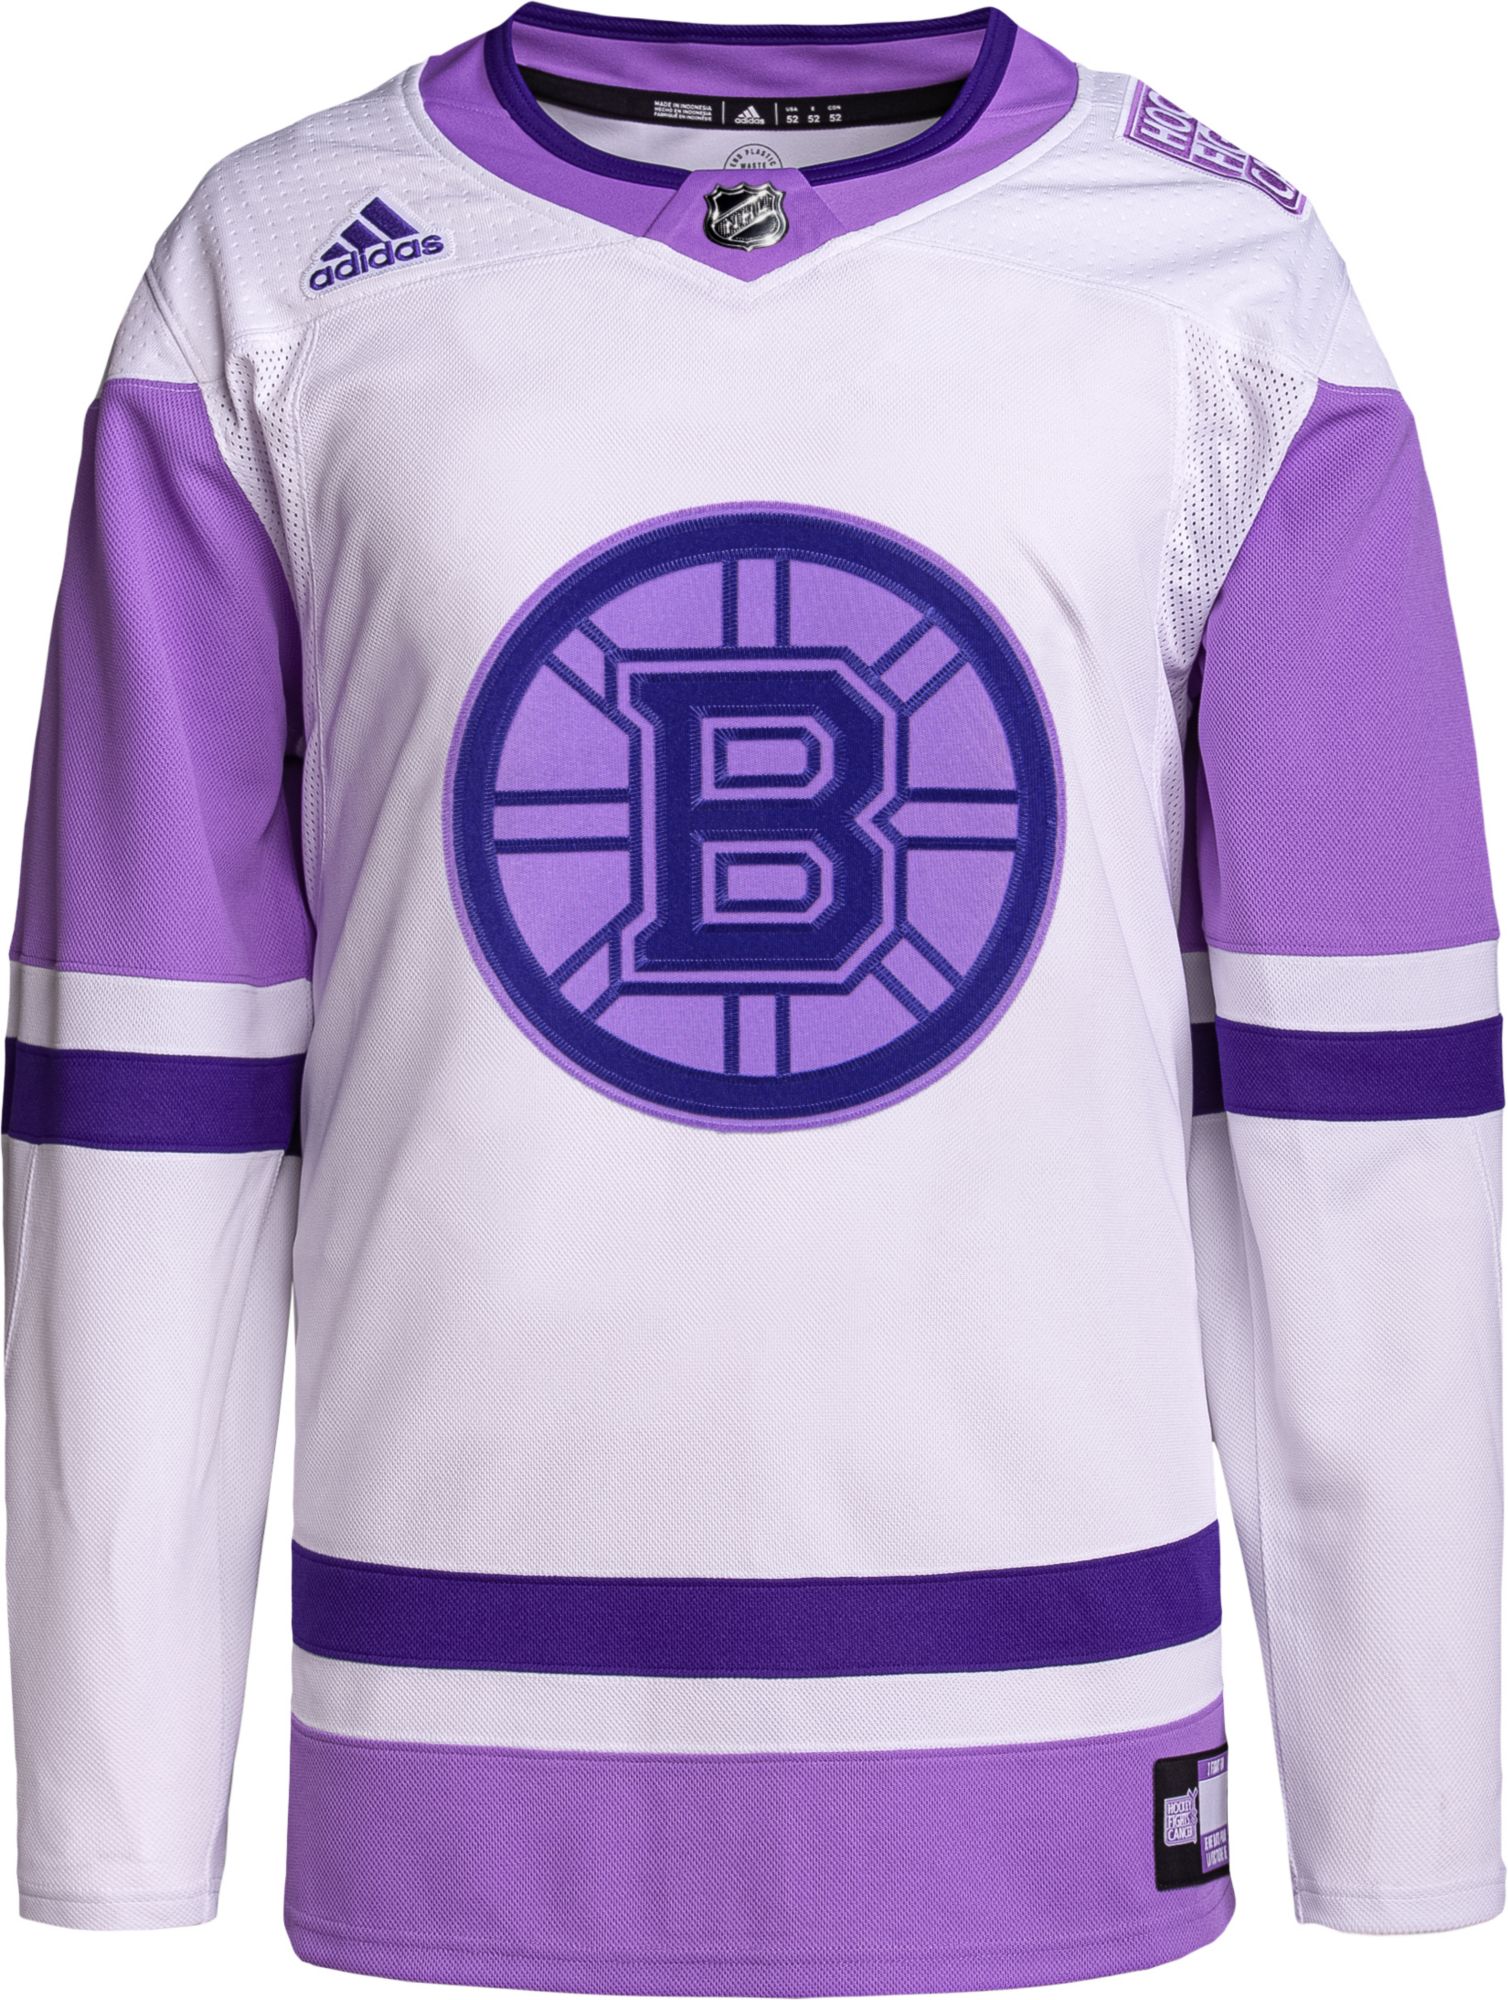 boston bruins hockey shirt